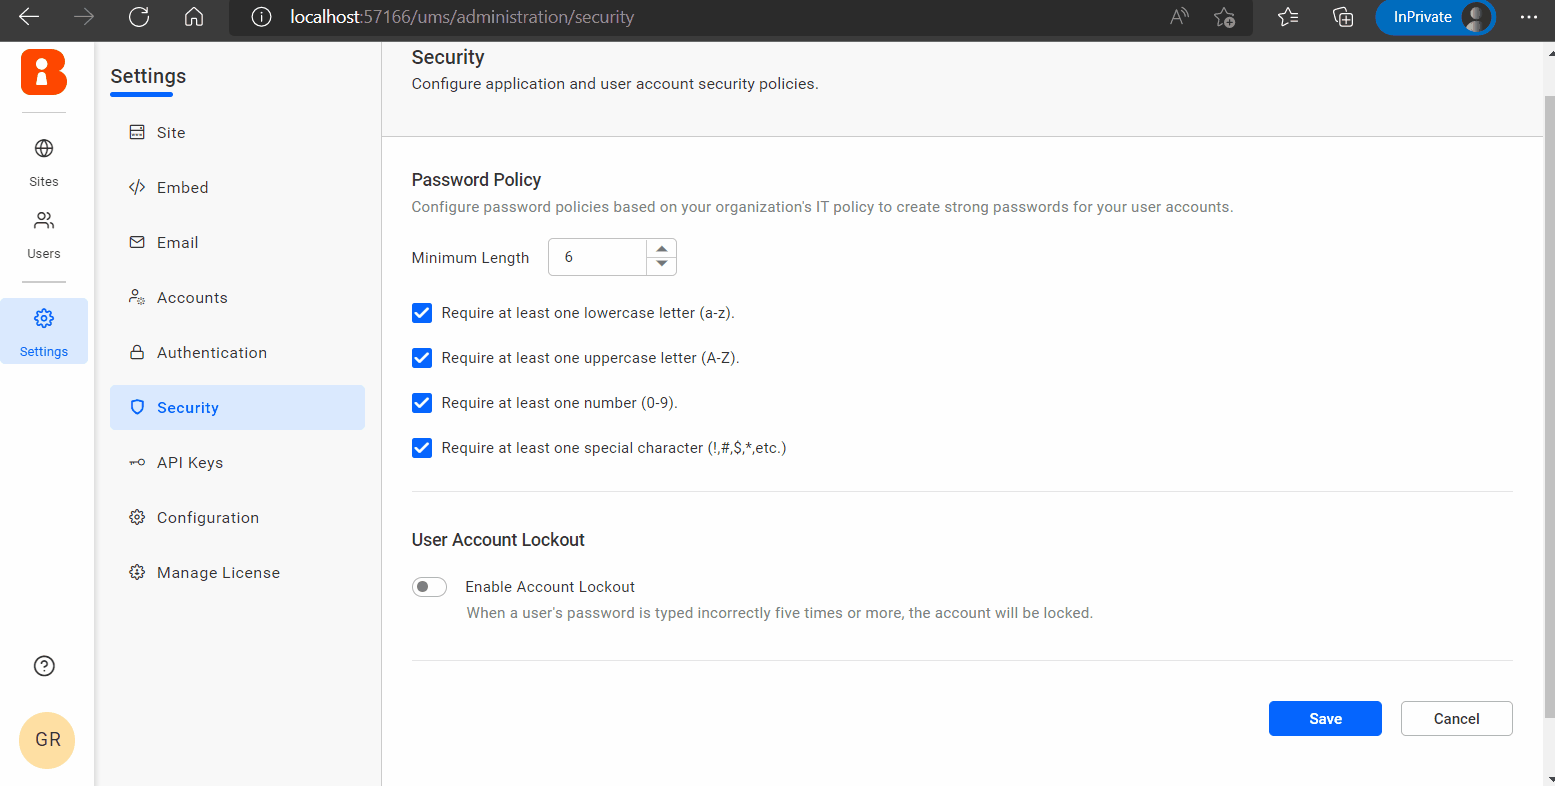 Lock accounts support